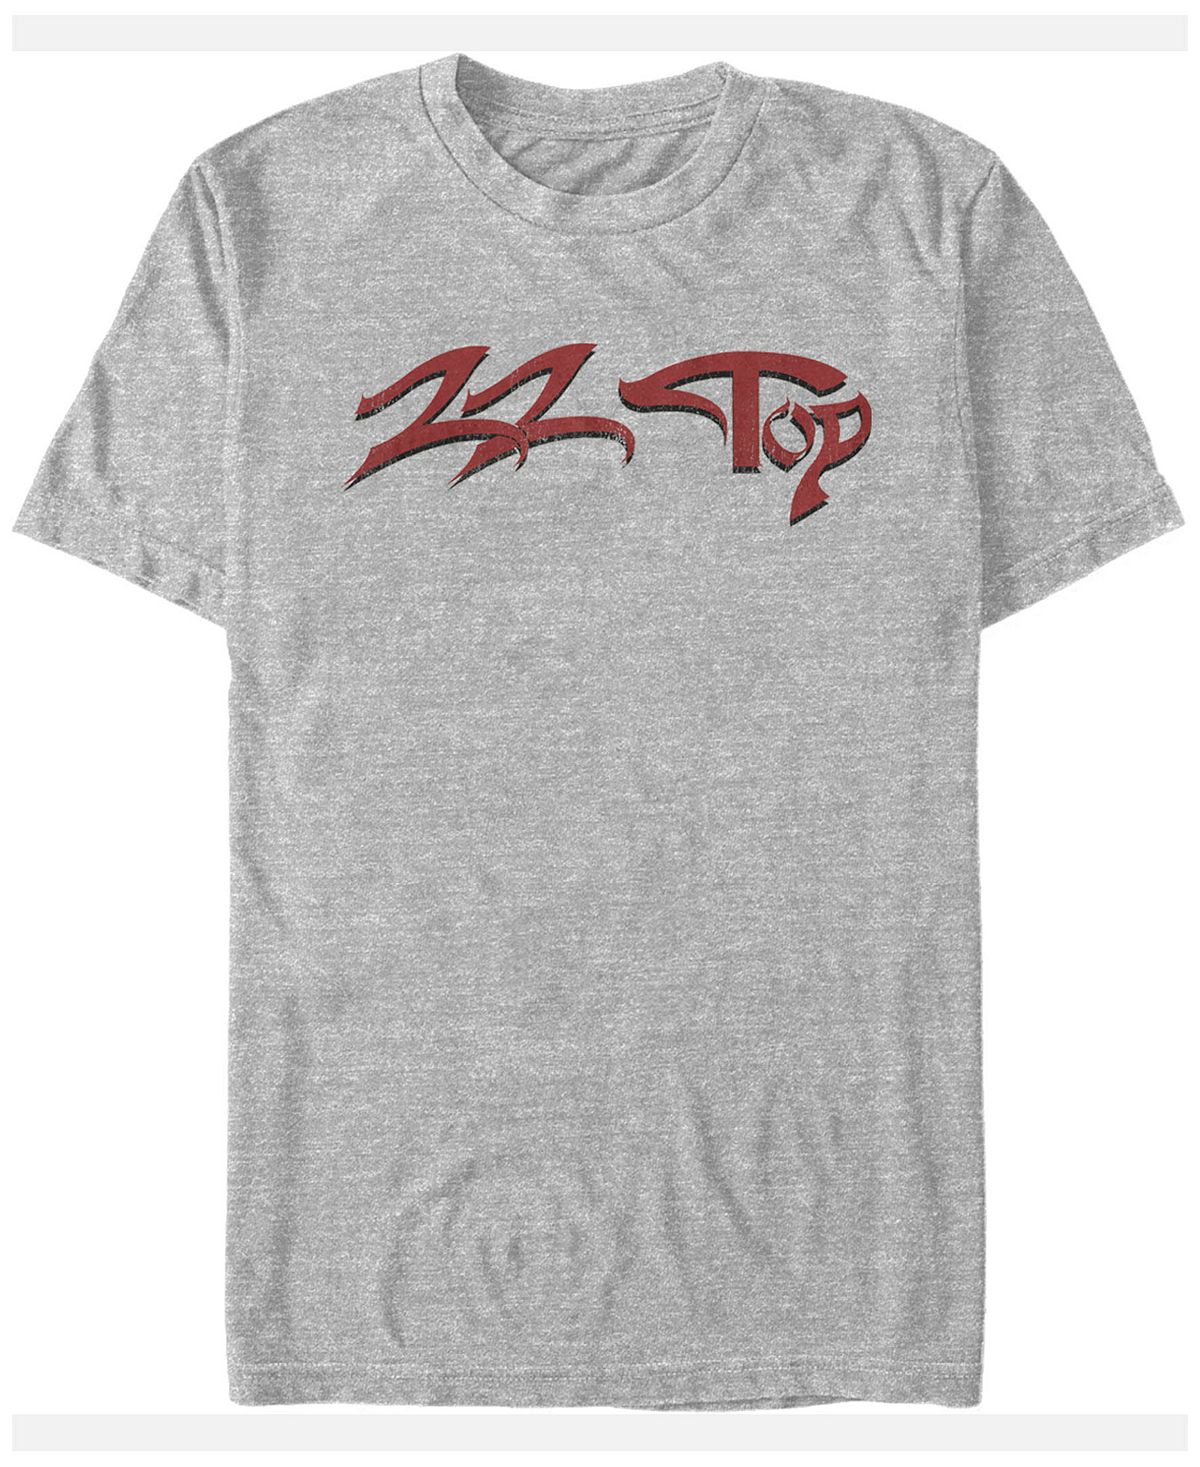 Мужская футболка с текстовым логотипом и коротким рукавом Fifth Sun, серый zz top zz top deguello 180 gr